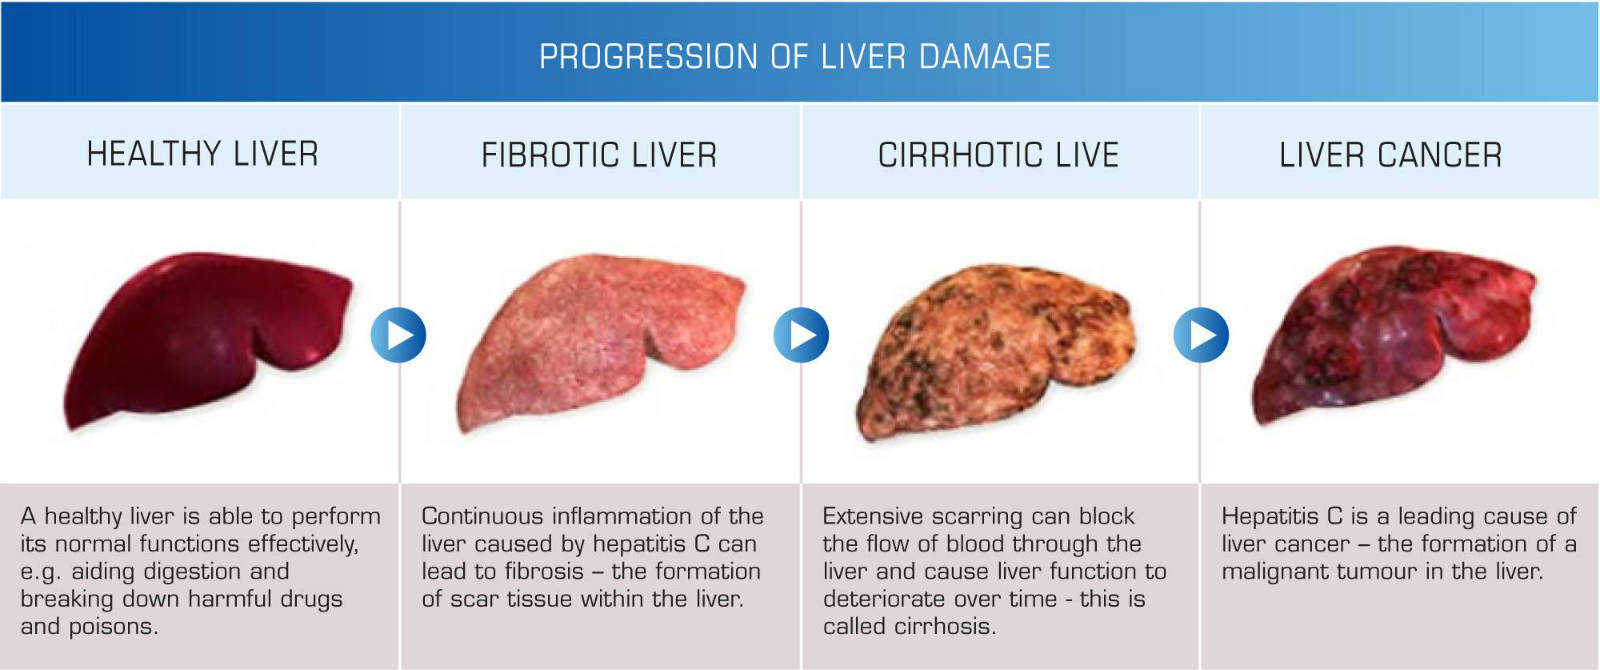 Progress-of-Liver-Damage